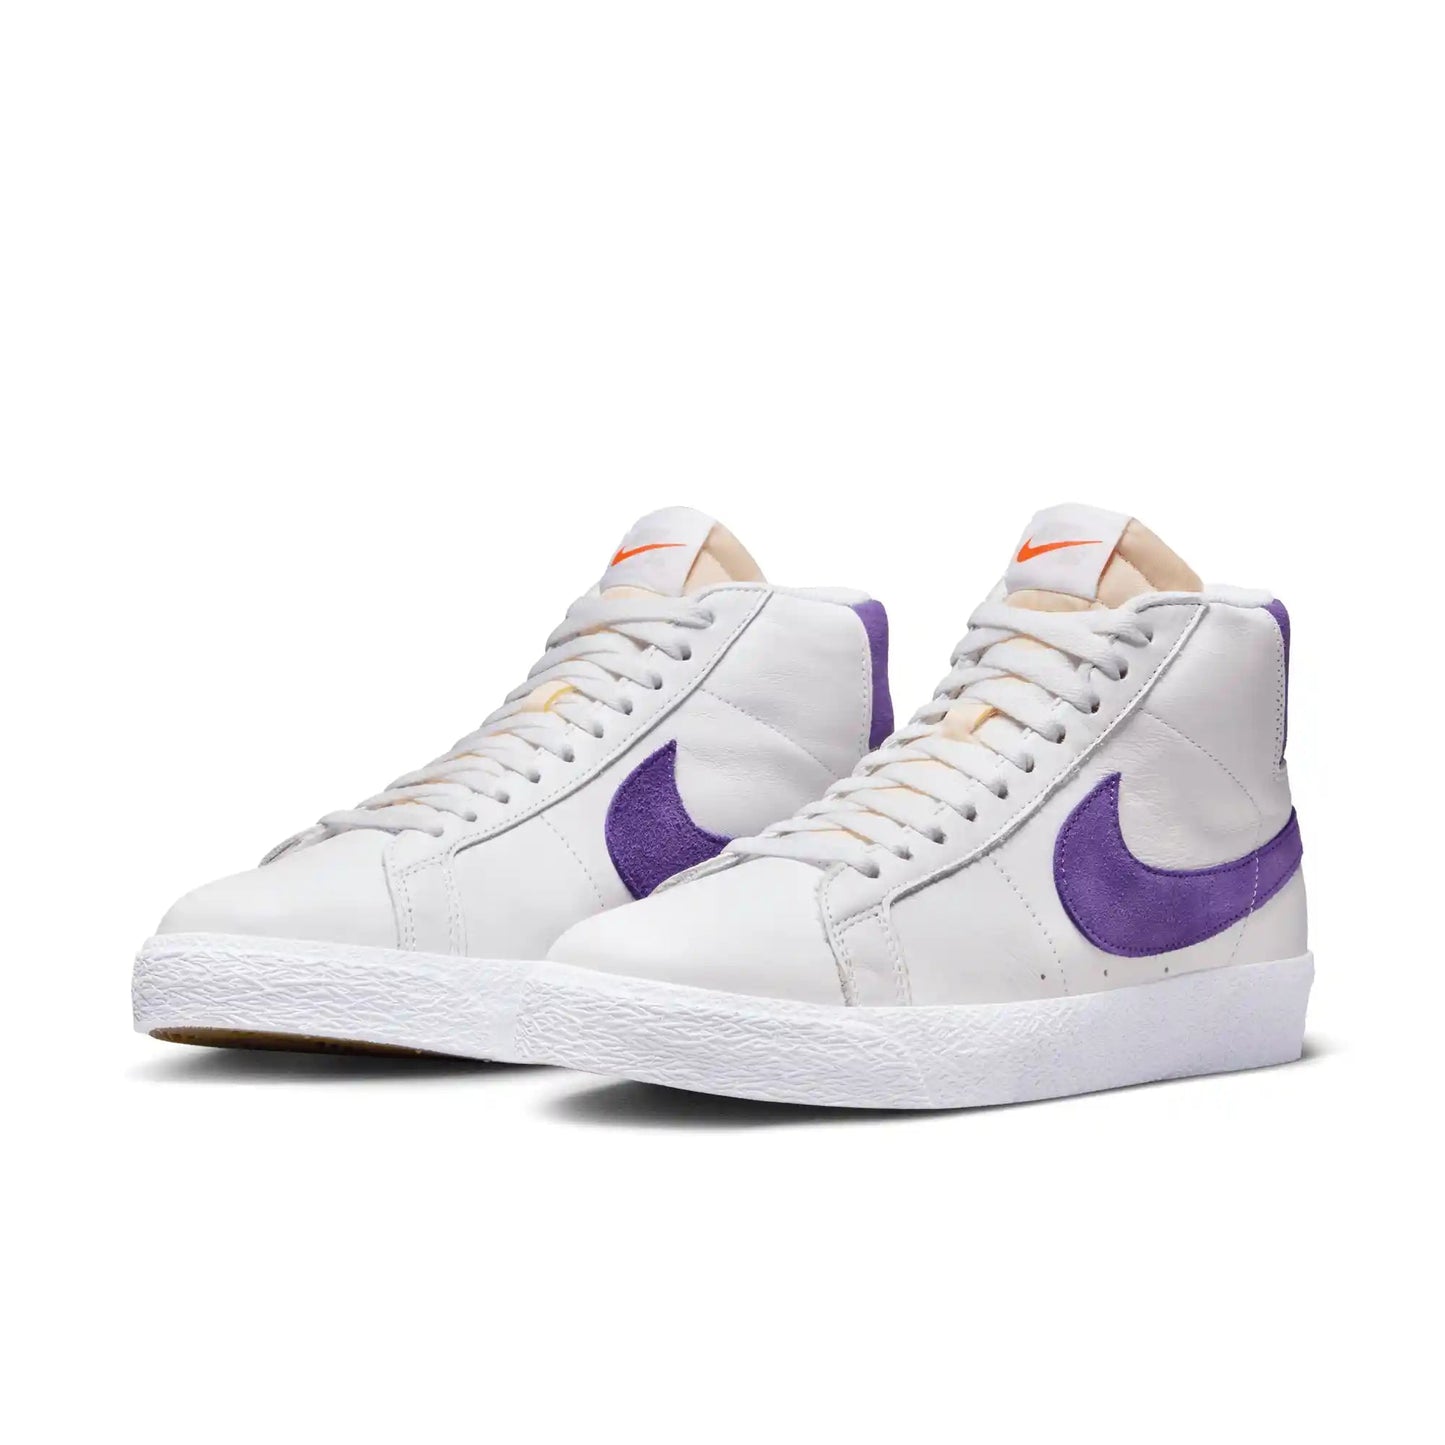 Nike SB Zoom Blazer Mid, white/court purple-white-gum light brown - Tiki Room Skateboards - 2